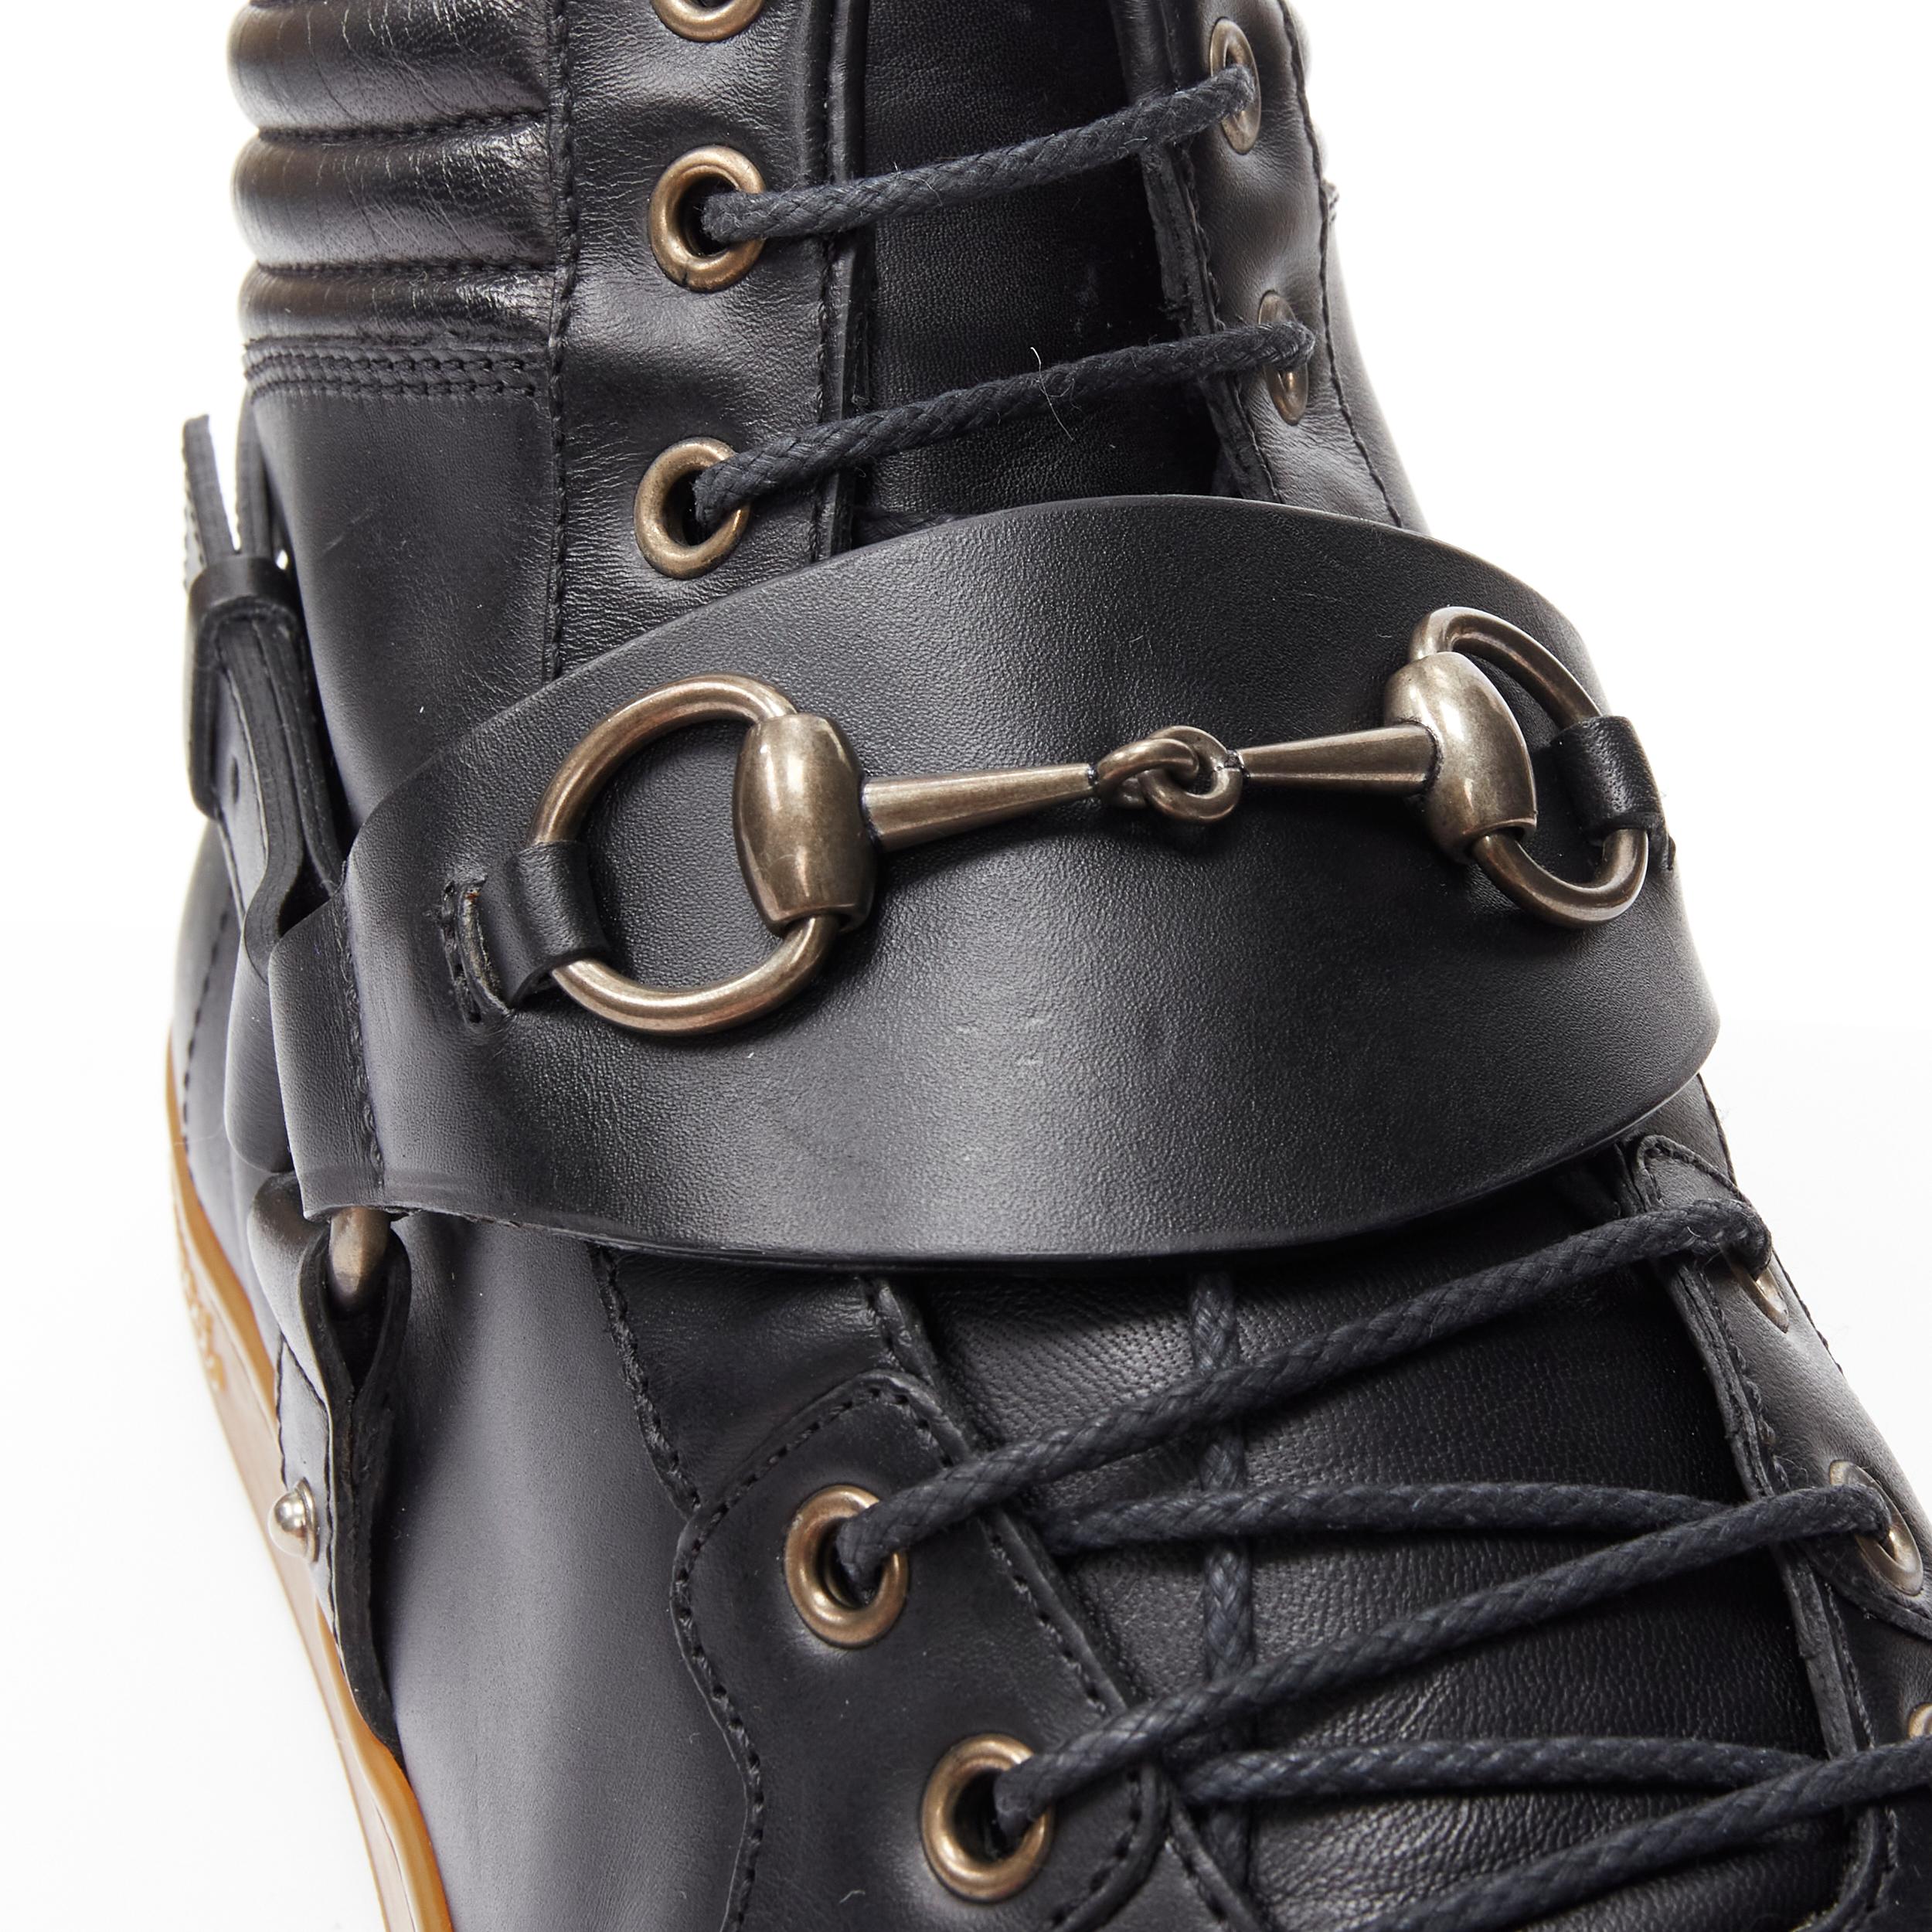 seltene GUCCI Horsebit harness schwarzes Leder Gummisohle hohe Top-Sneaker UK8 EU42 Referenz: TGAS/B01961 Marke: Gucci MATERIAL: Leder Farbe: Schwarz Muster: Solide Verschluss: Schnürung Extra Detail: Hufeisen-Harnisch-Details. Gewachste